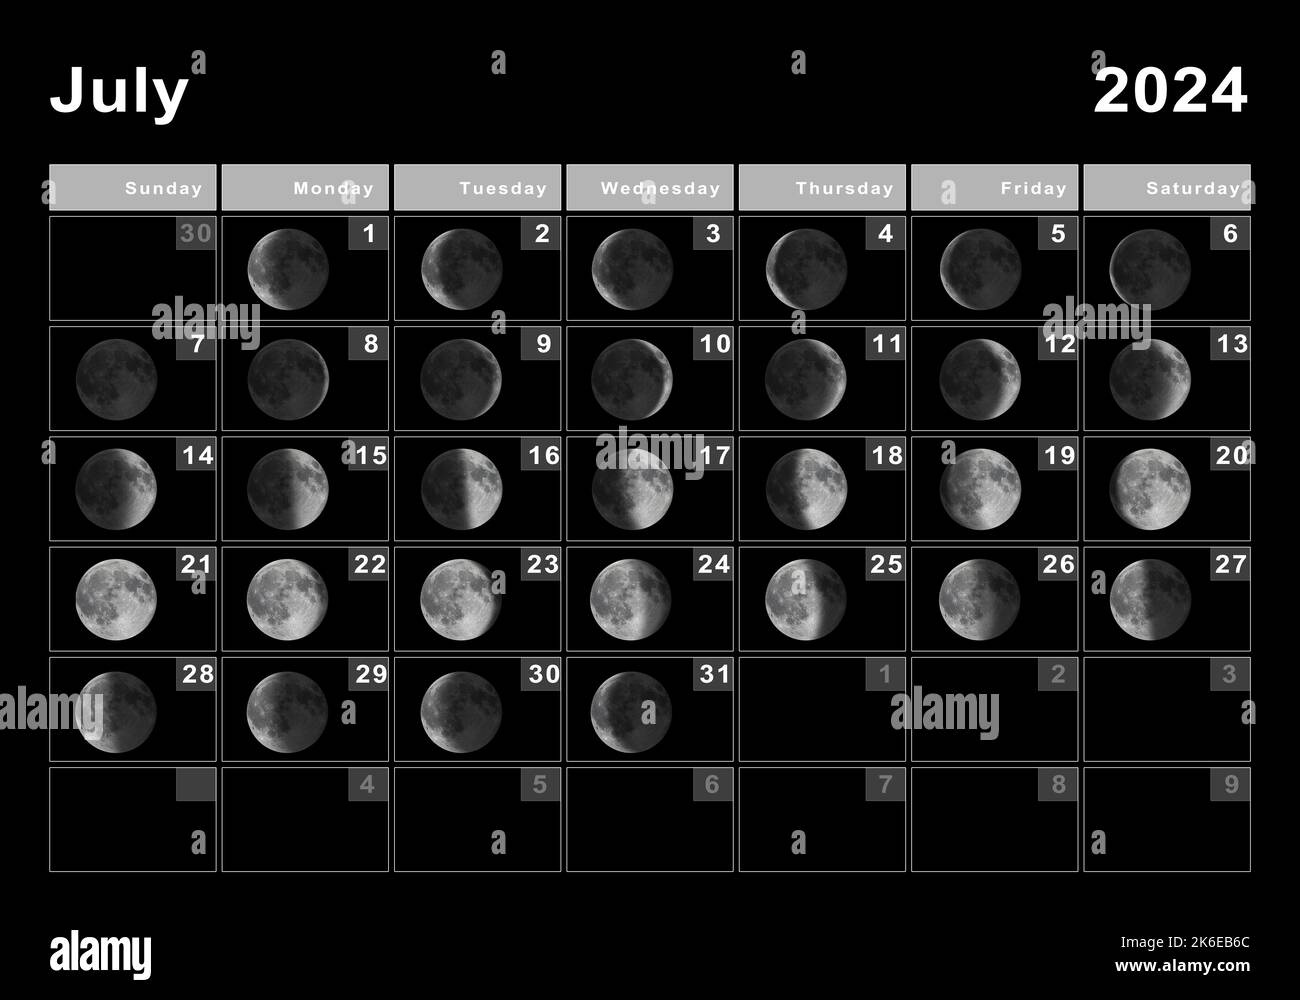 July 2024 Lunar Calendar, Moon Cycles, Moon Phases Stock Photo - Alamy for July 20 Lunar Calendar 2024